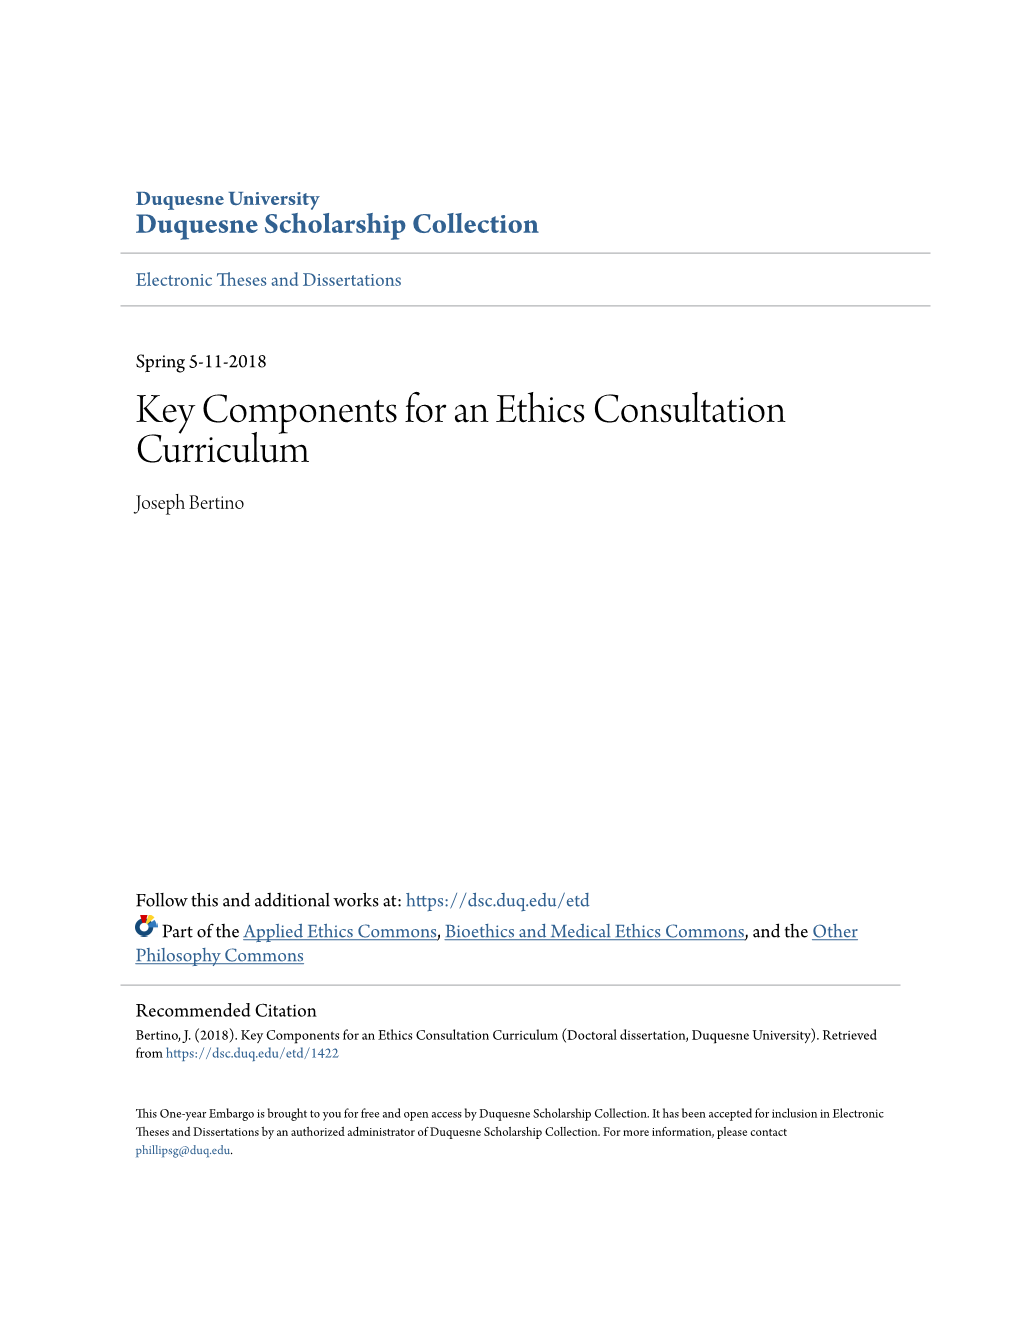 Key Components for an Ethics Consultation Curriculum Joseph Bertino